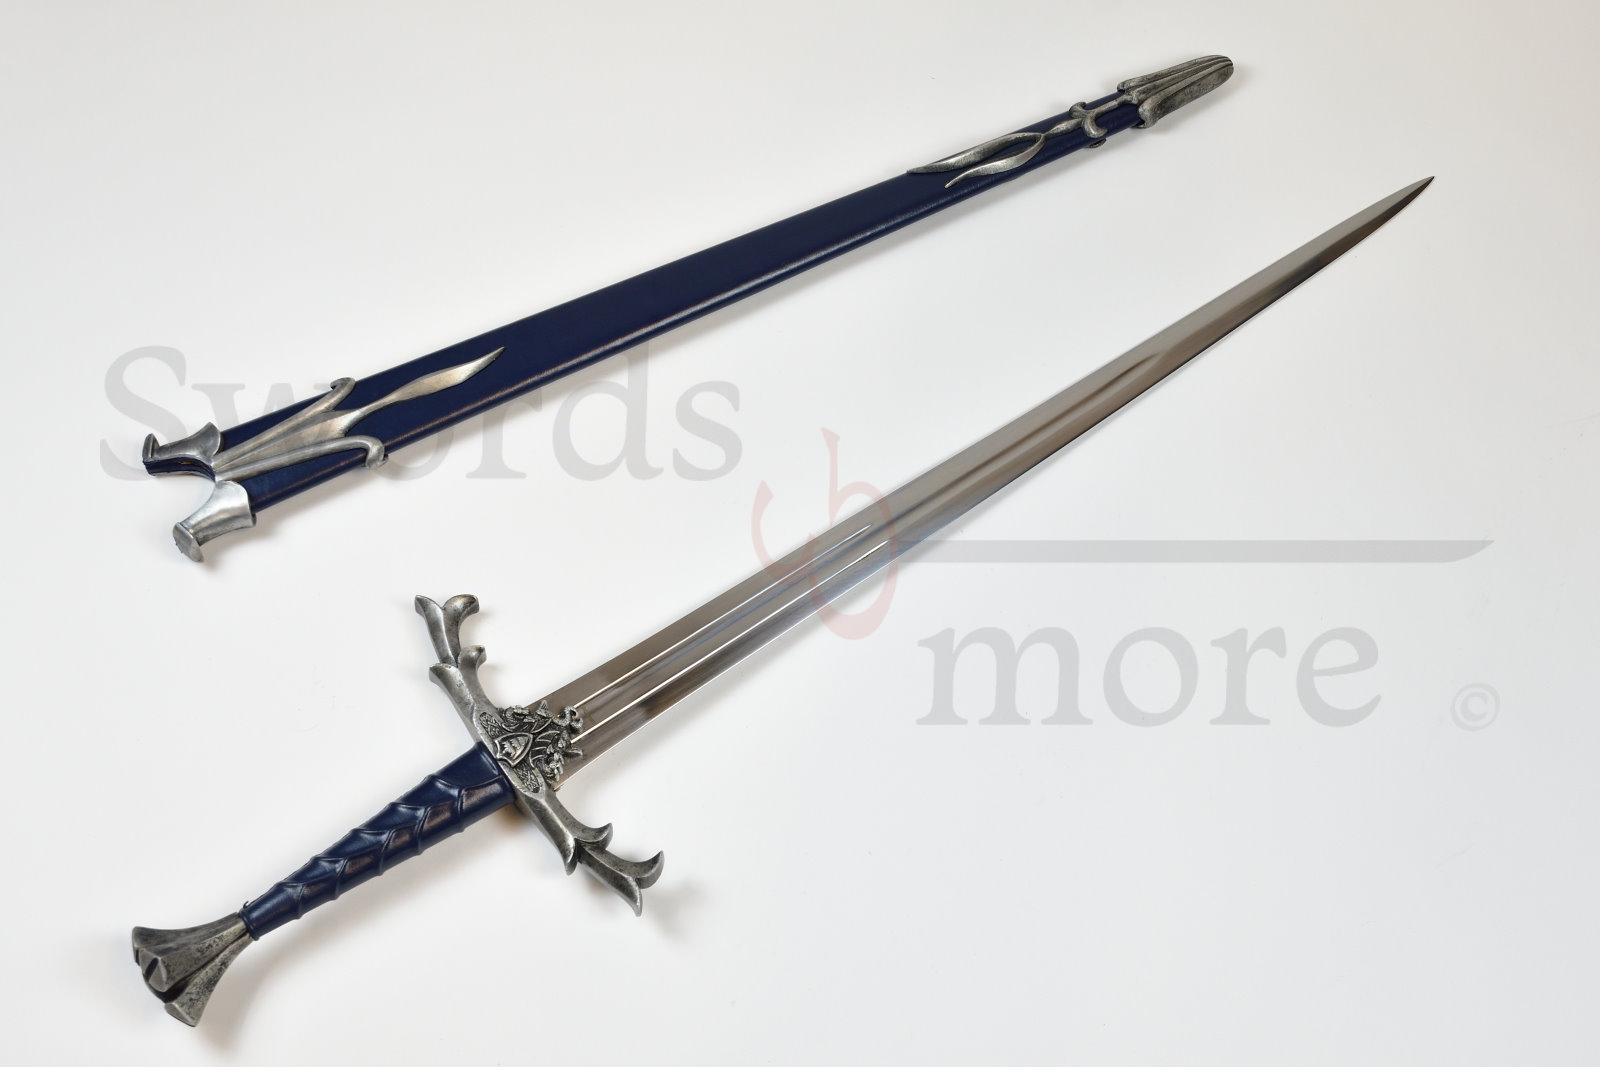 The Sword of Excalibur